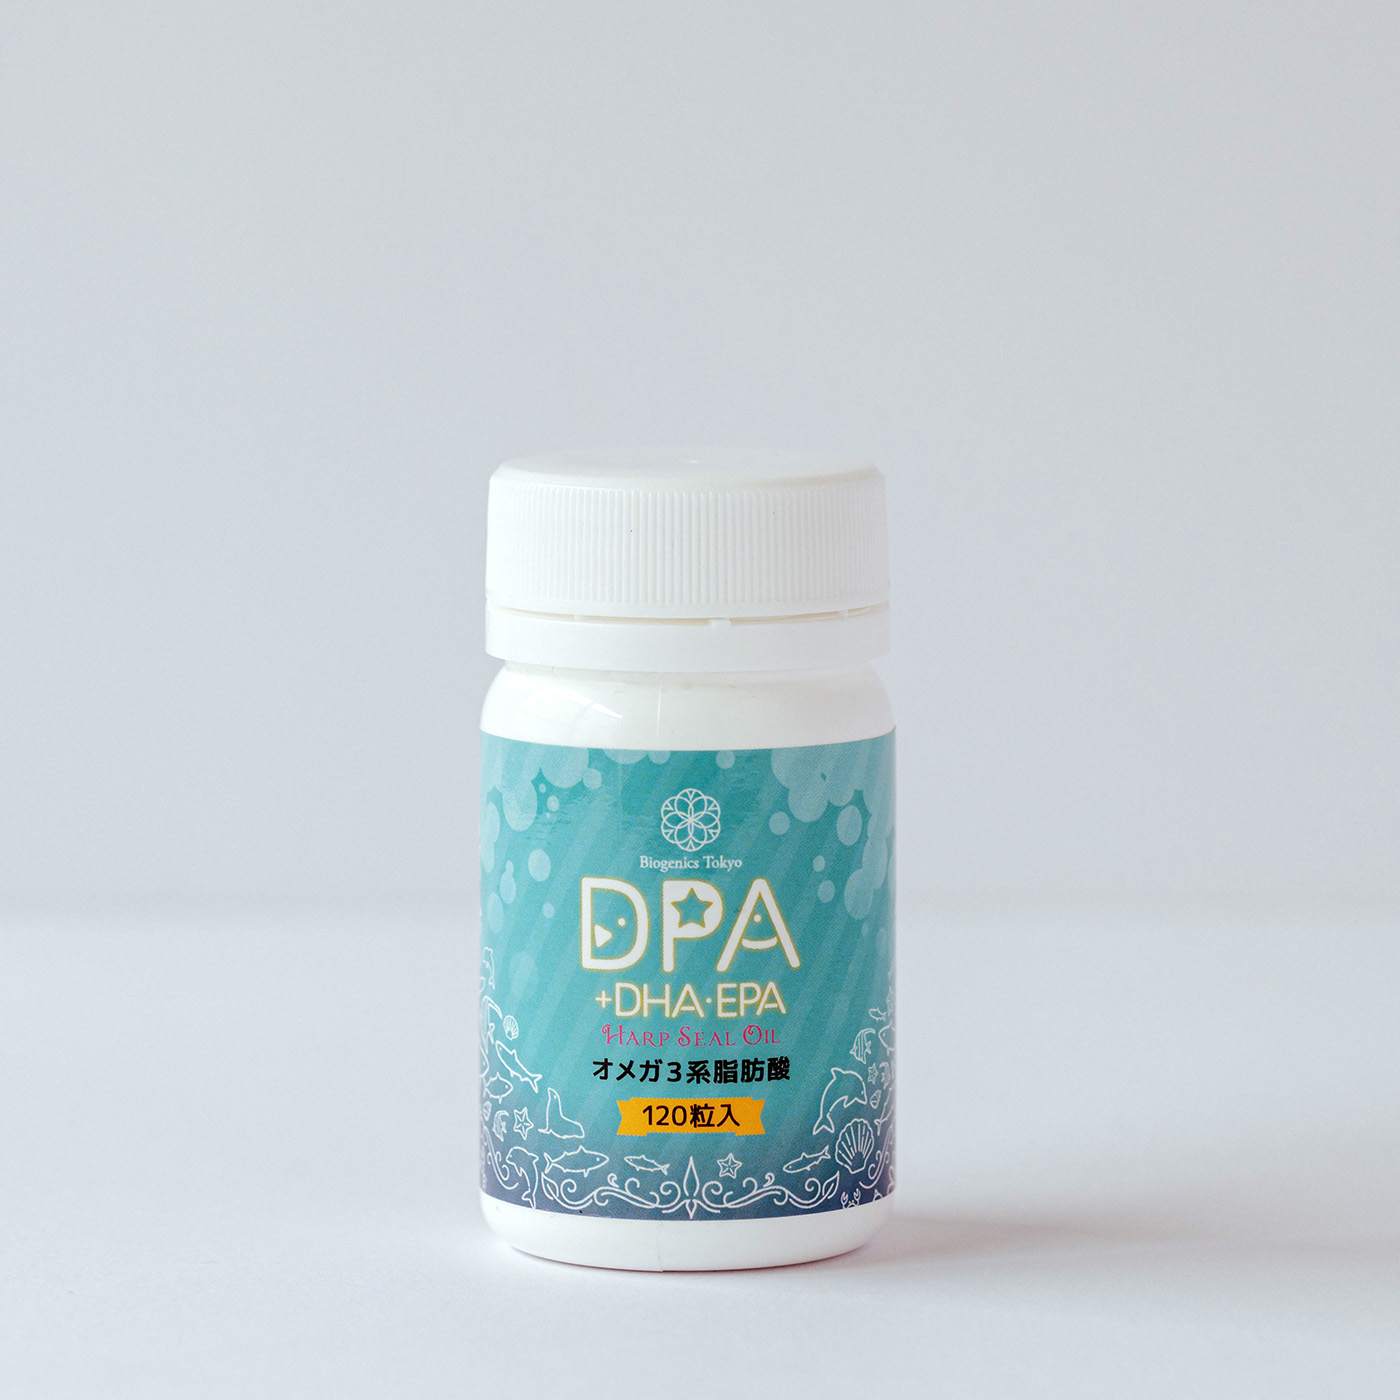 DPA+DHA・EPA